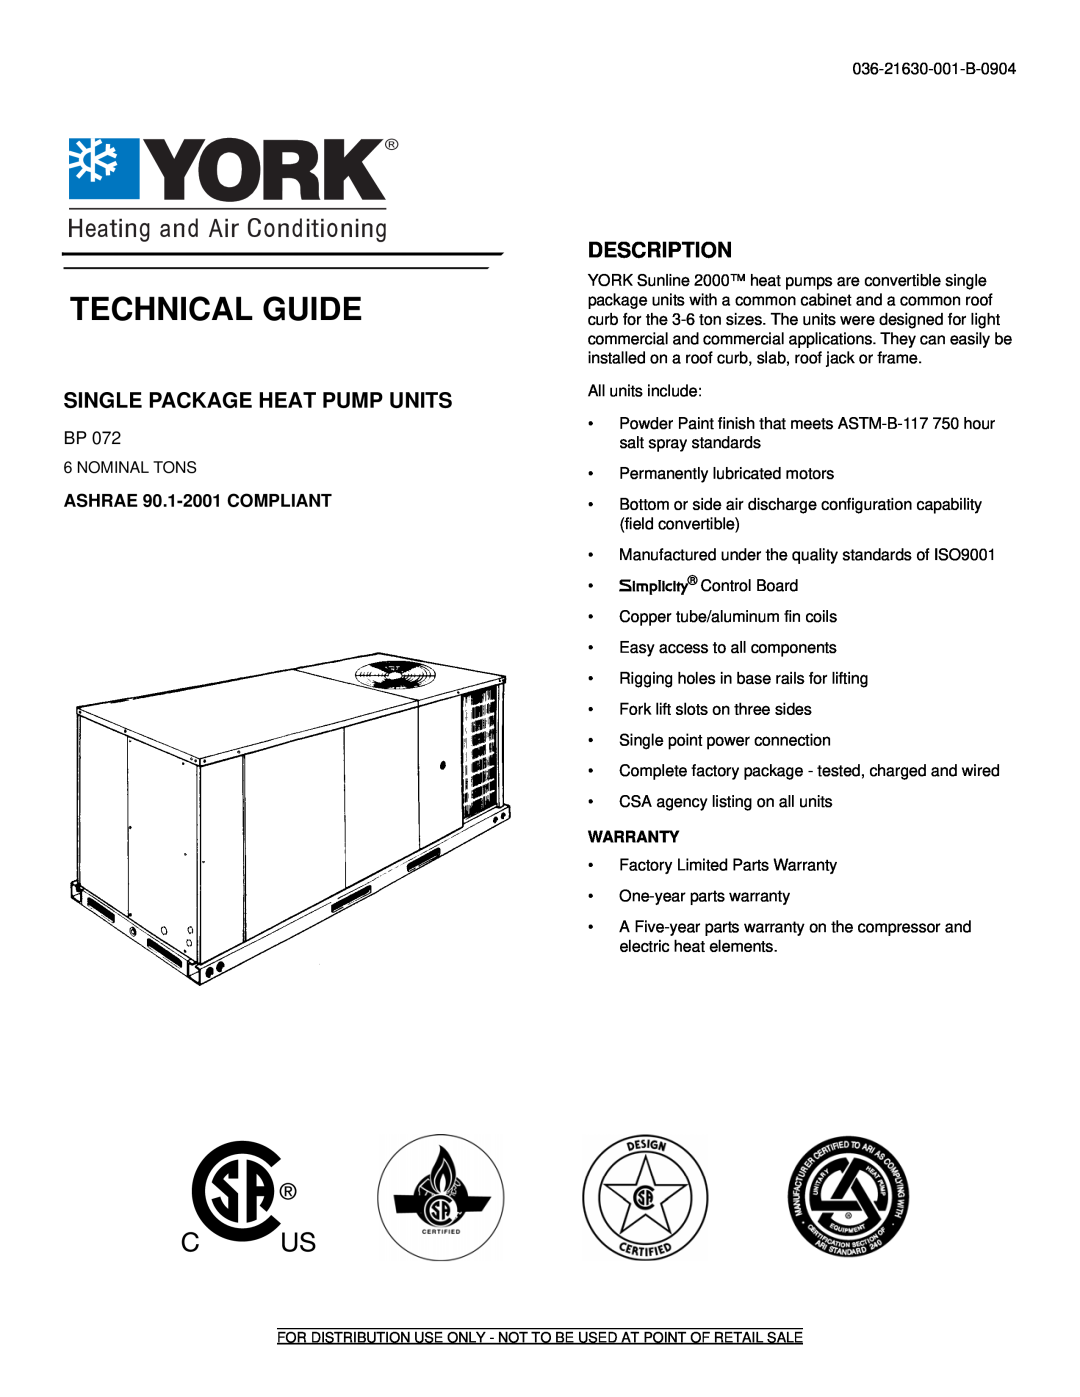 York BP 072 warranty Single Package Heat Pump Units, Description, ASHRAE 90.1-2001COMPLIANT, Technical Guide 